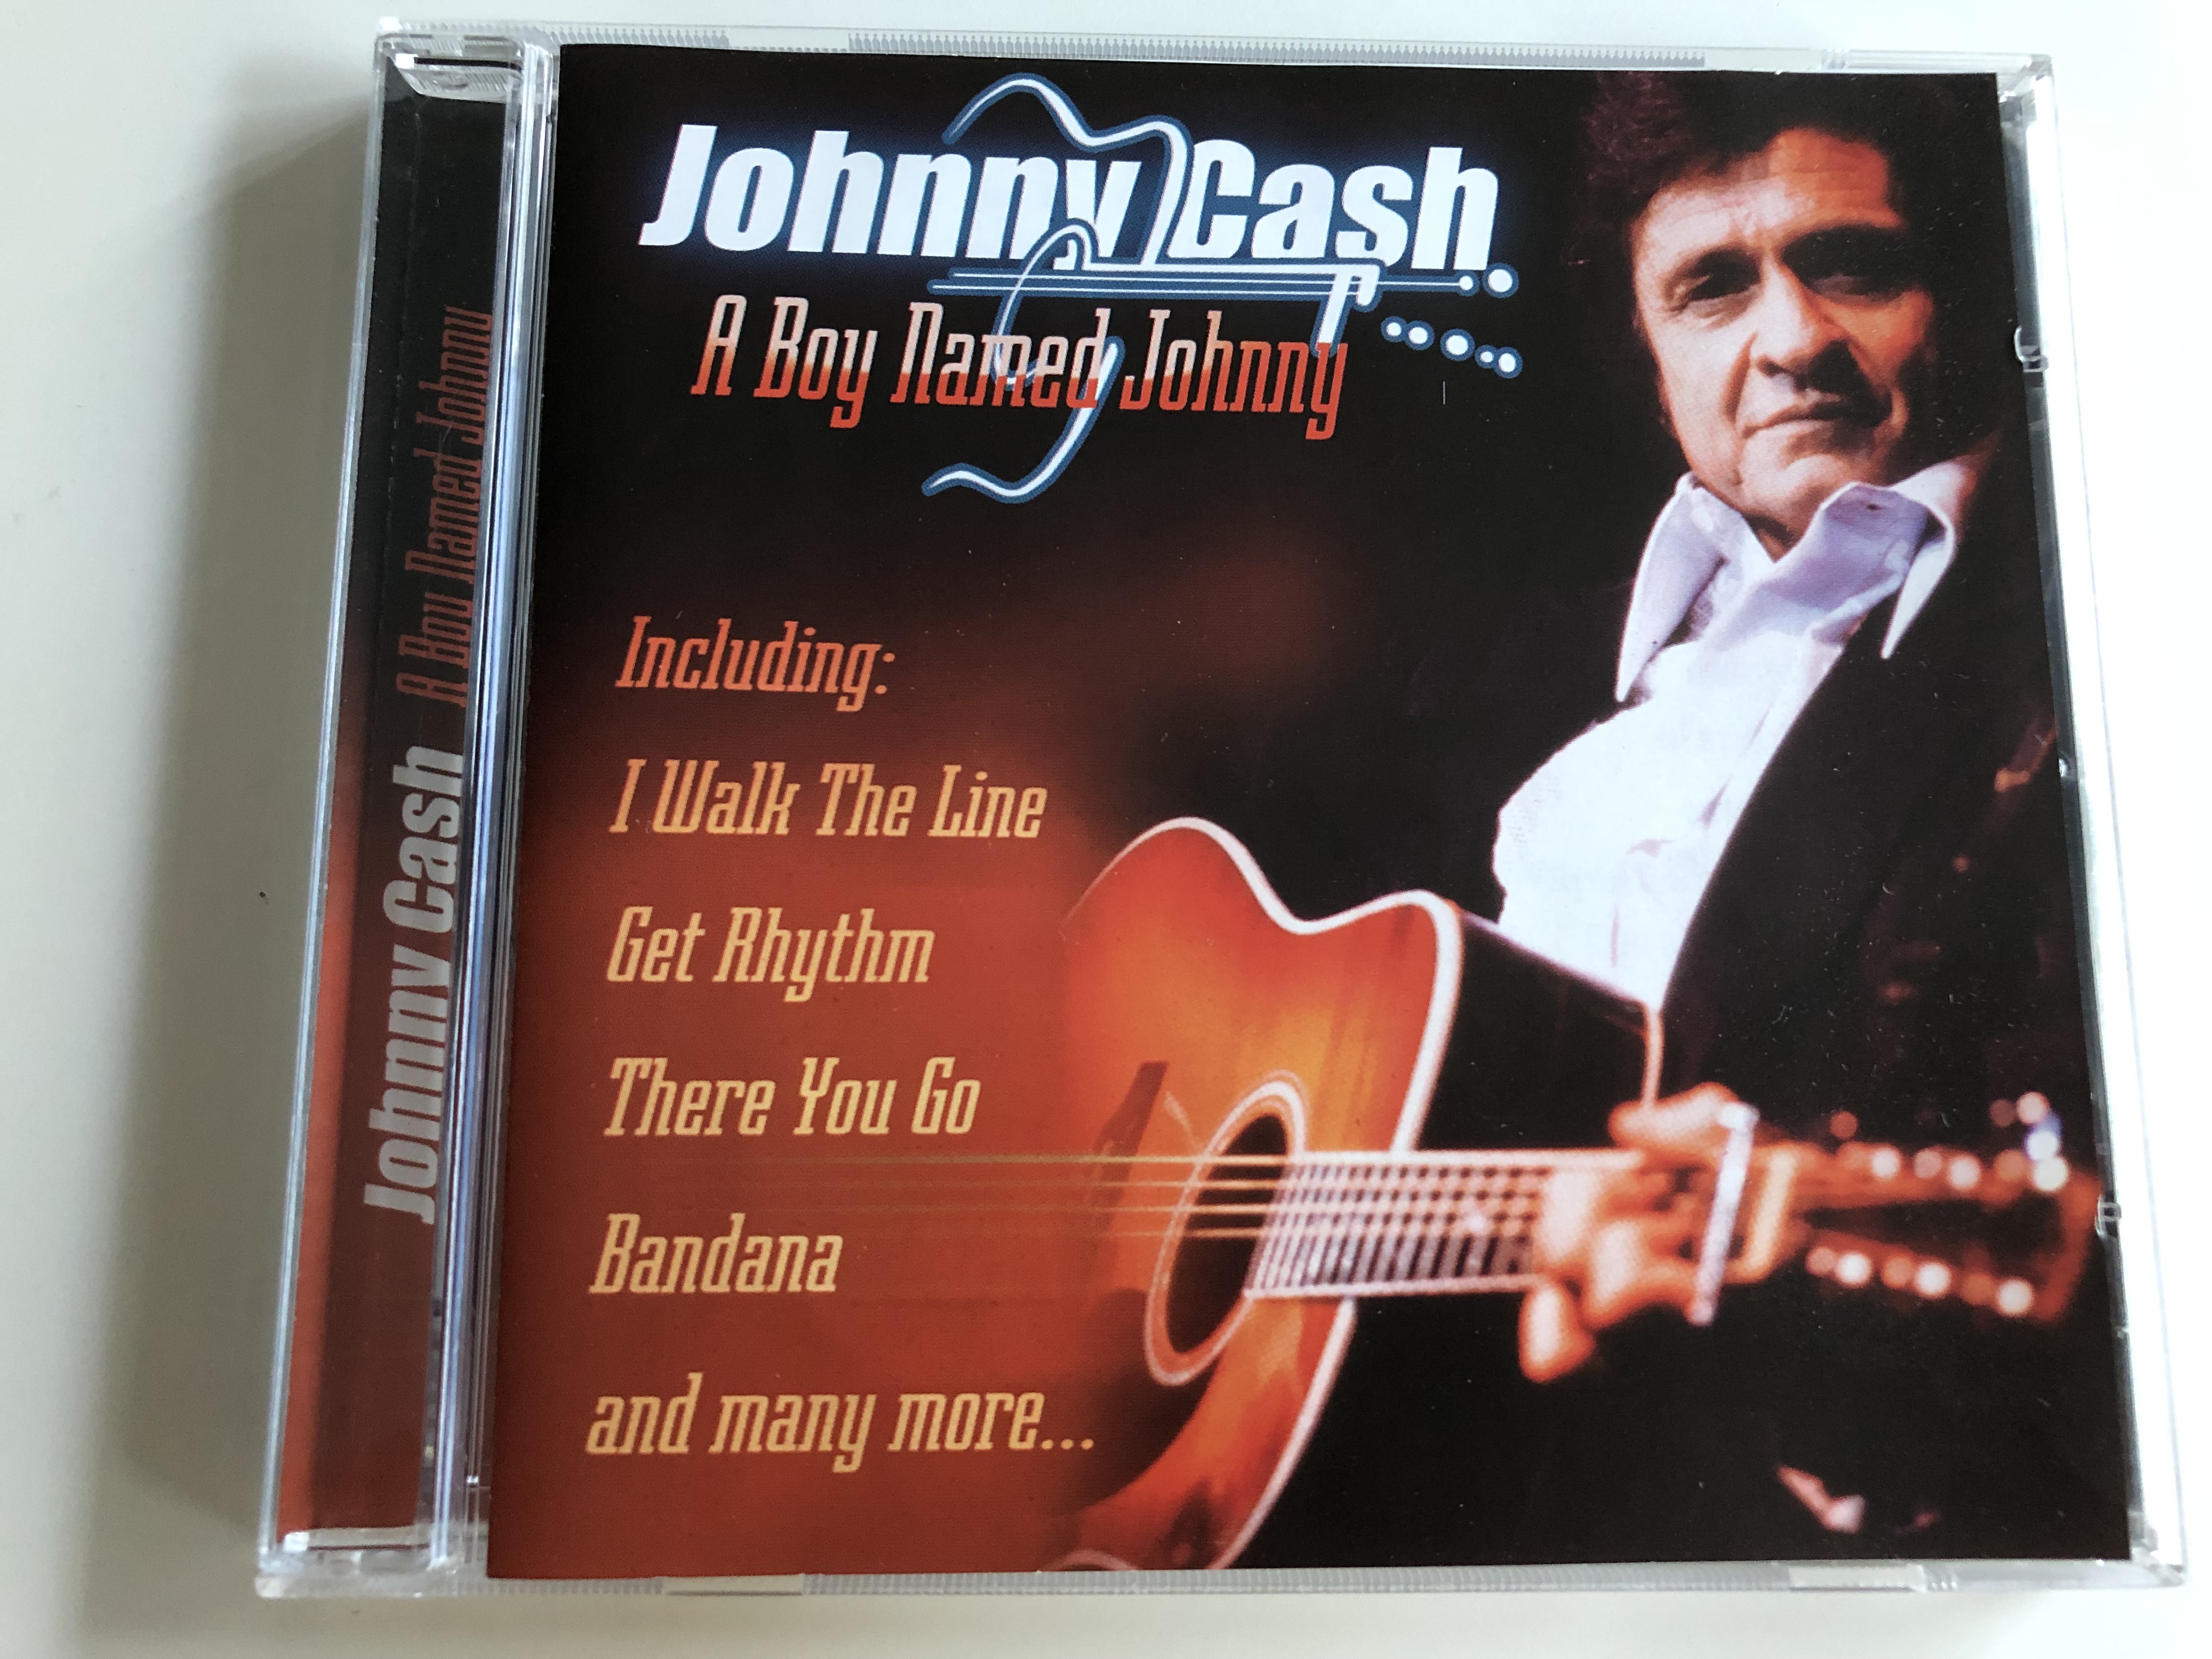 Johnny Cash - A boy named Johnny / Including: I Walk the Line, Get Rhythm,  There You GO, Bandana and many more... / Audio CD 2001 / APWCD 1164 -  bibleinmylanguage